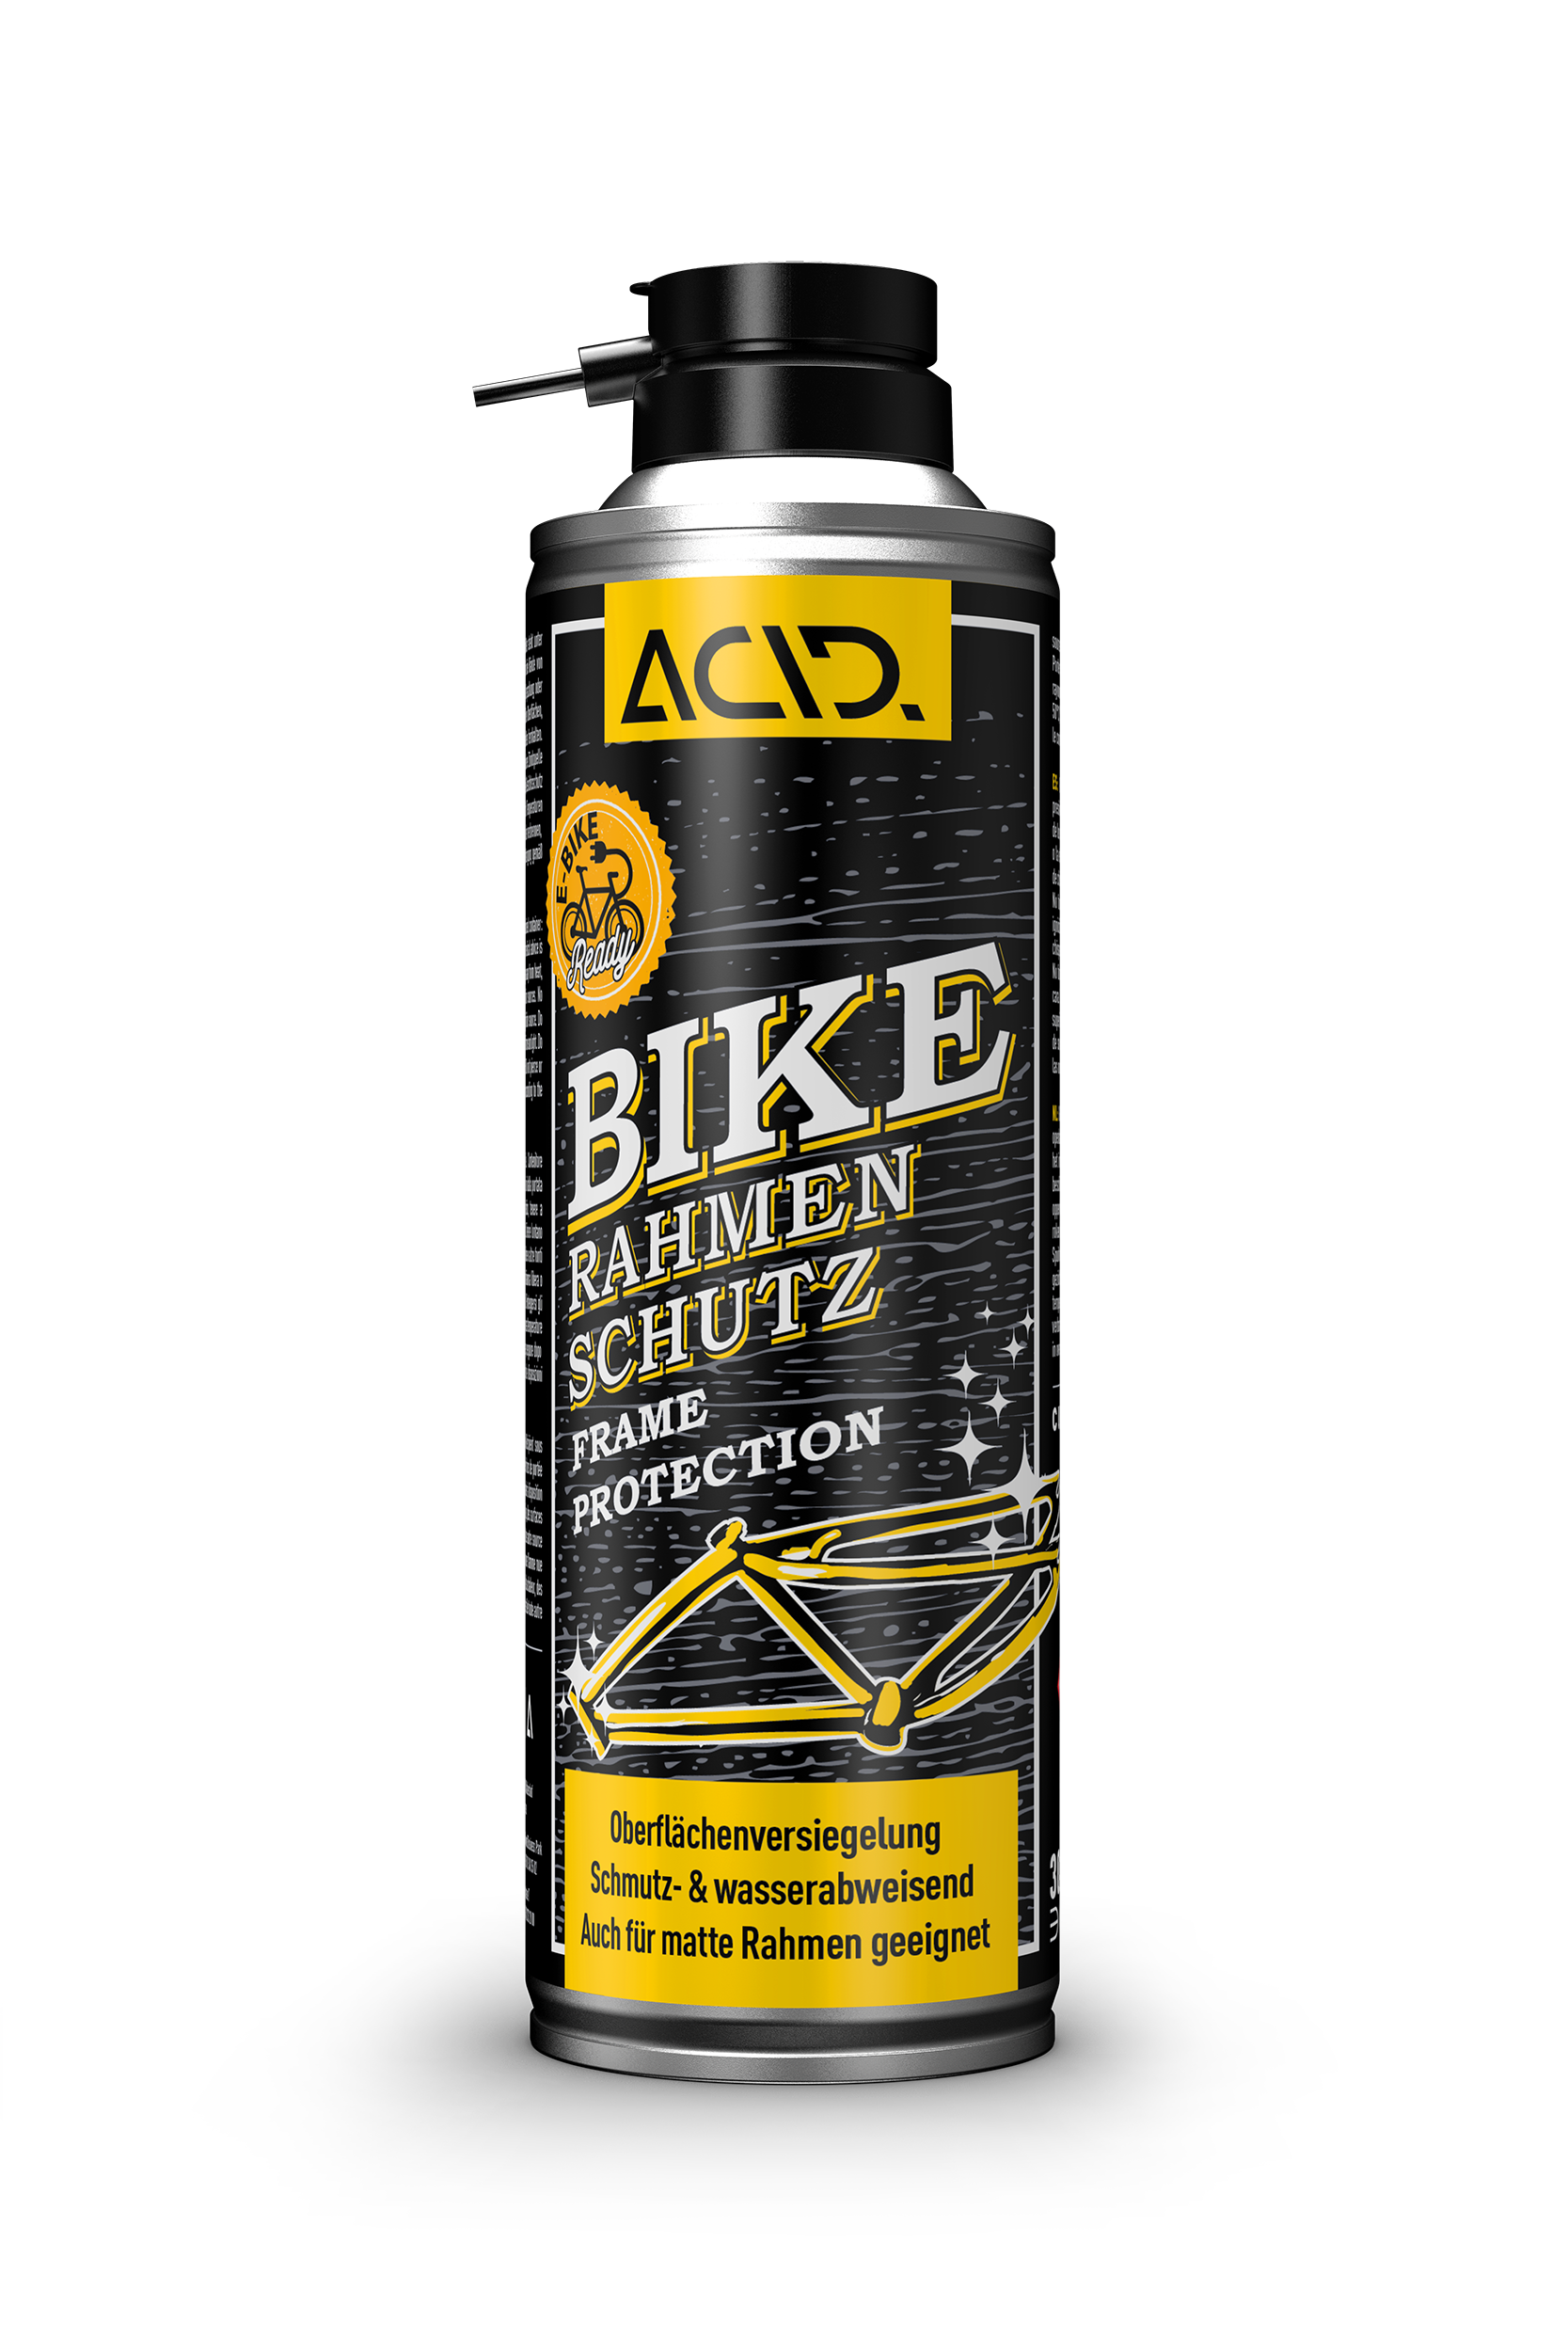 ACID Bike Frame Protection